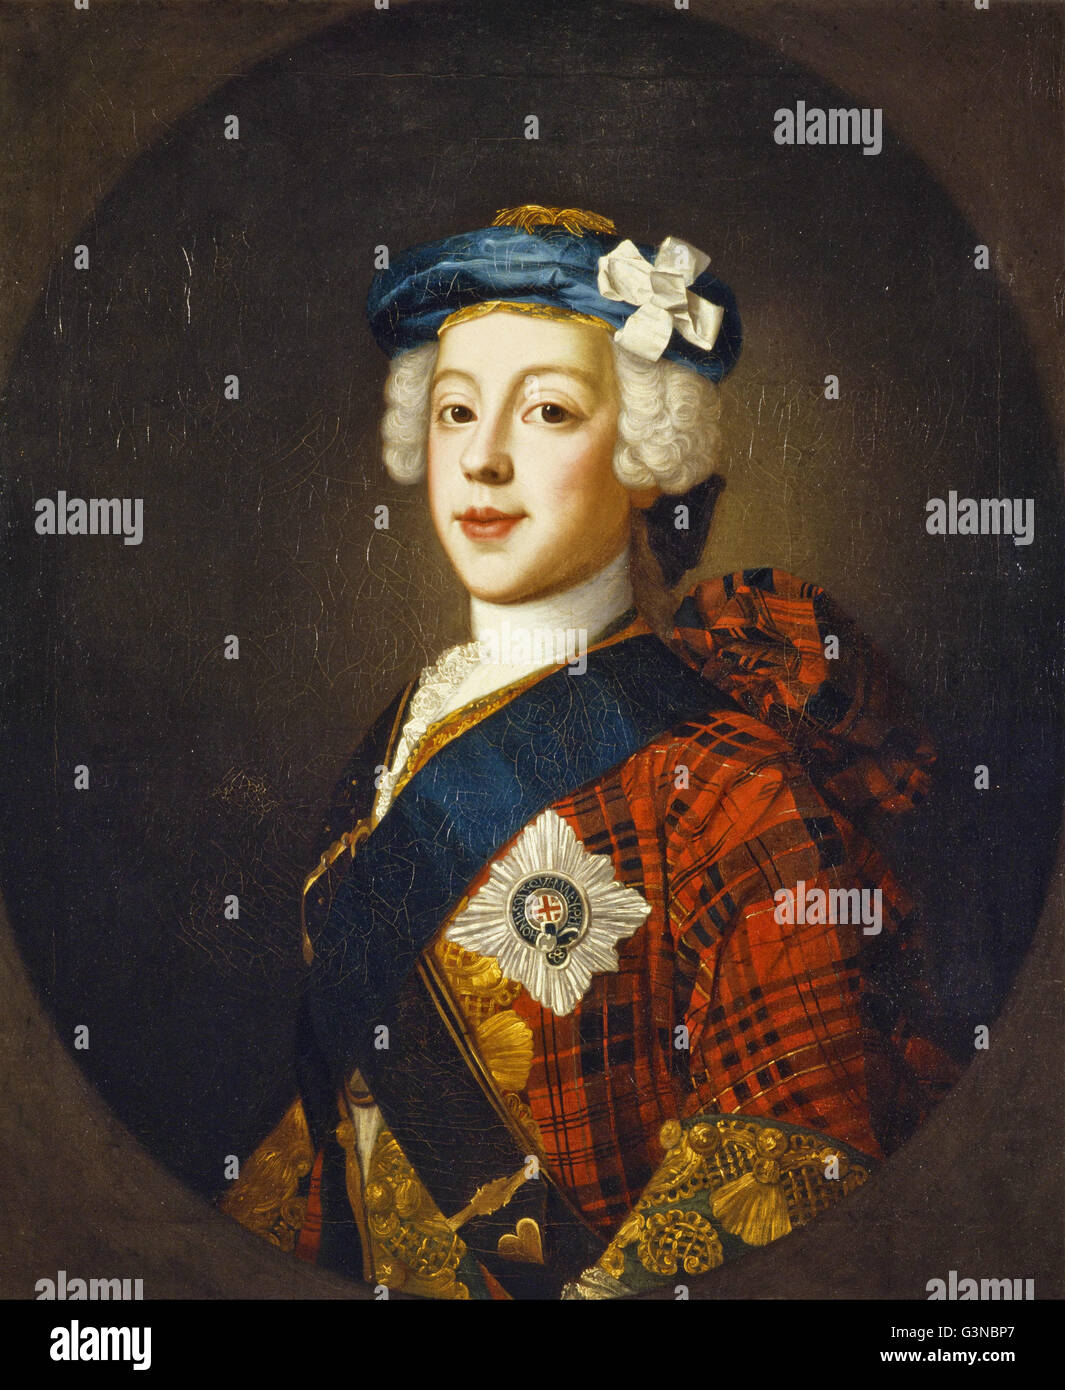 William Mosman - Prinz Charles Edward Stuart, 1720-1788. Ältester Sohn von Prinz James Francis Stockfoto